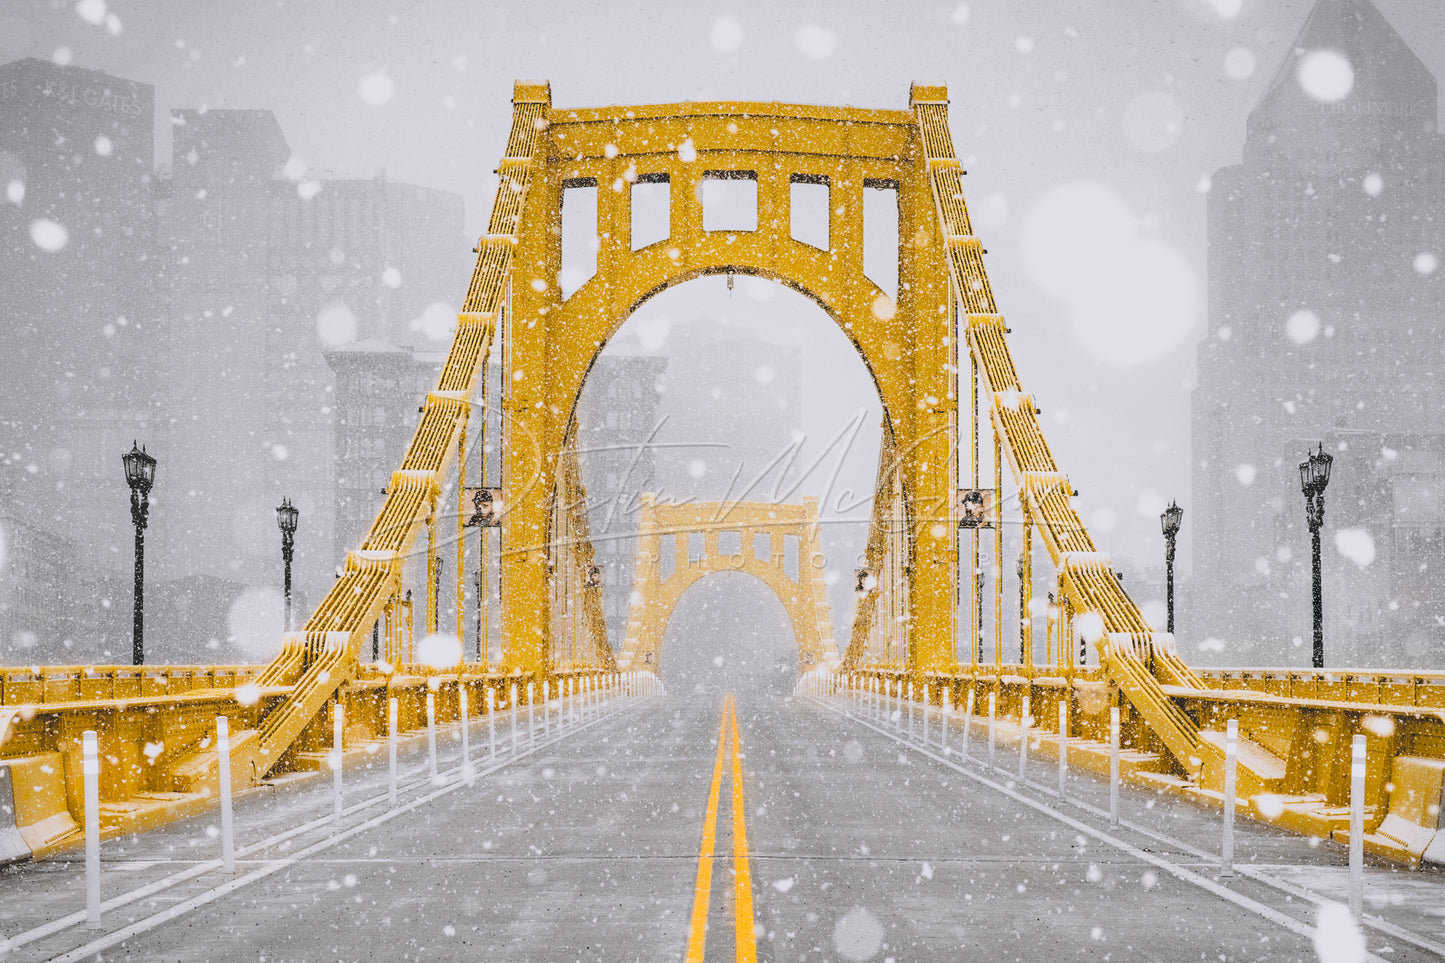 Black & Gold Snowy Roberto Clemente Bridge